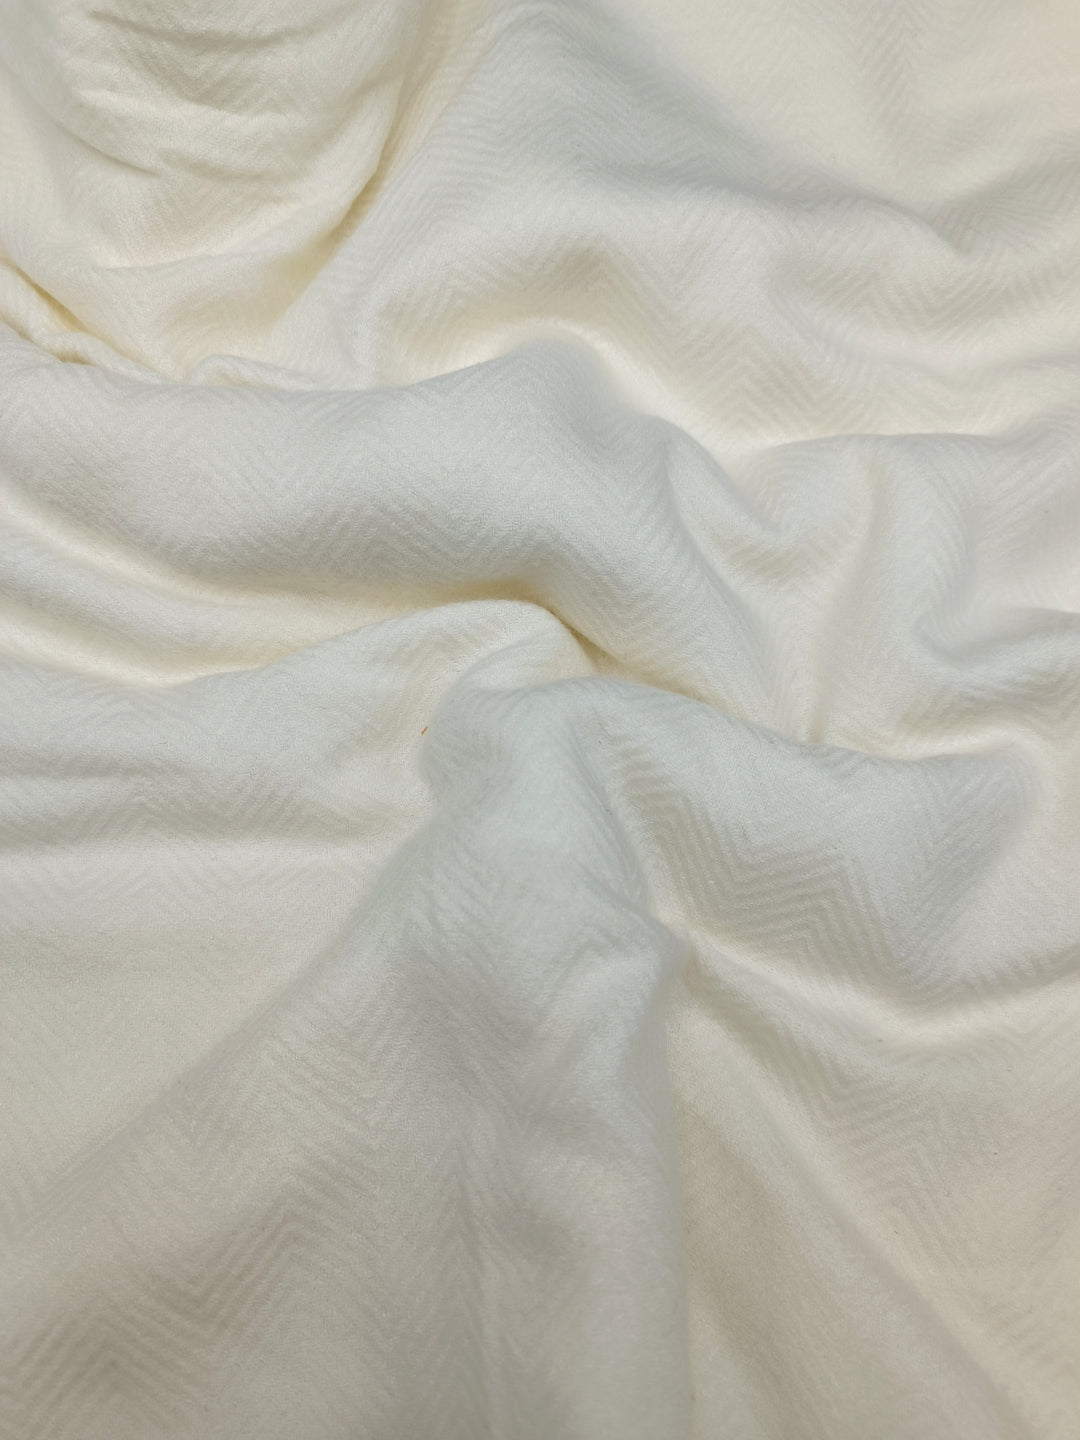 Premium Quality Extremely Soft Off White Pashmina Cashmere Shawl for Men